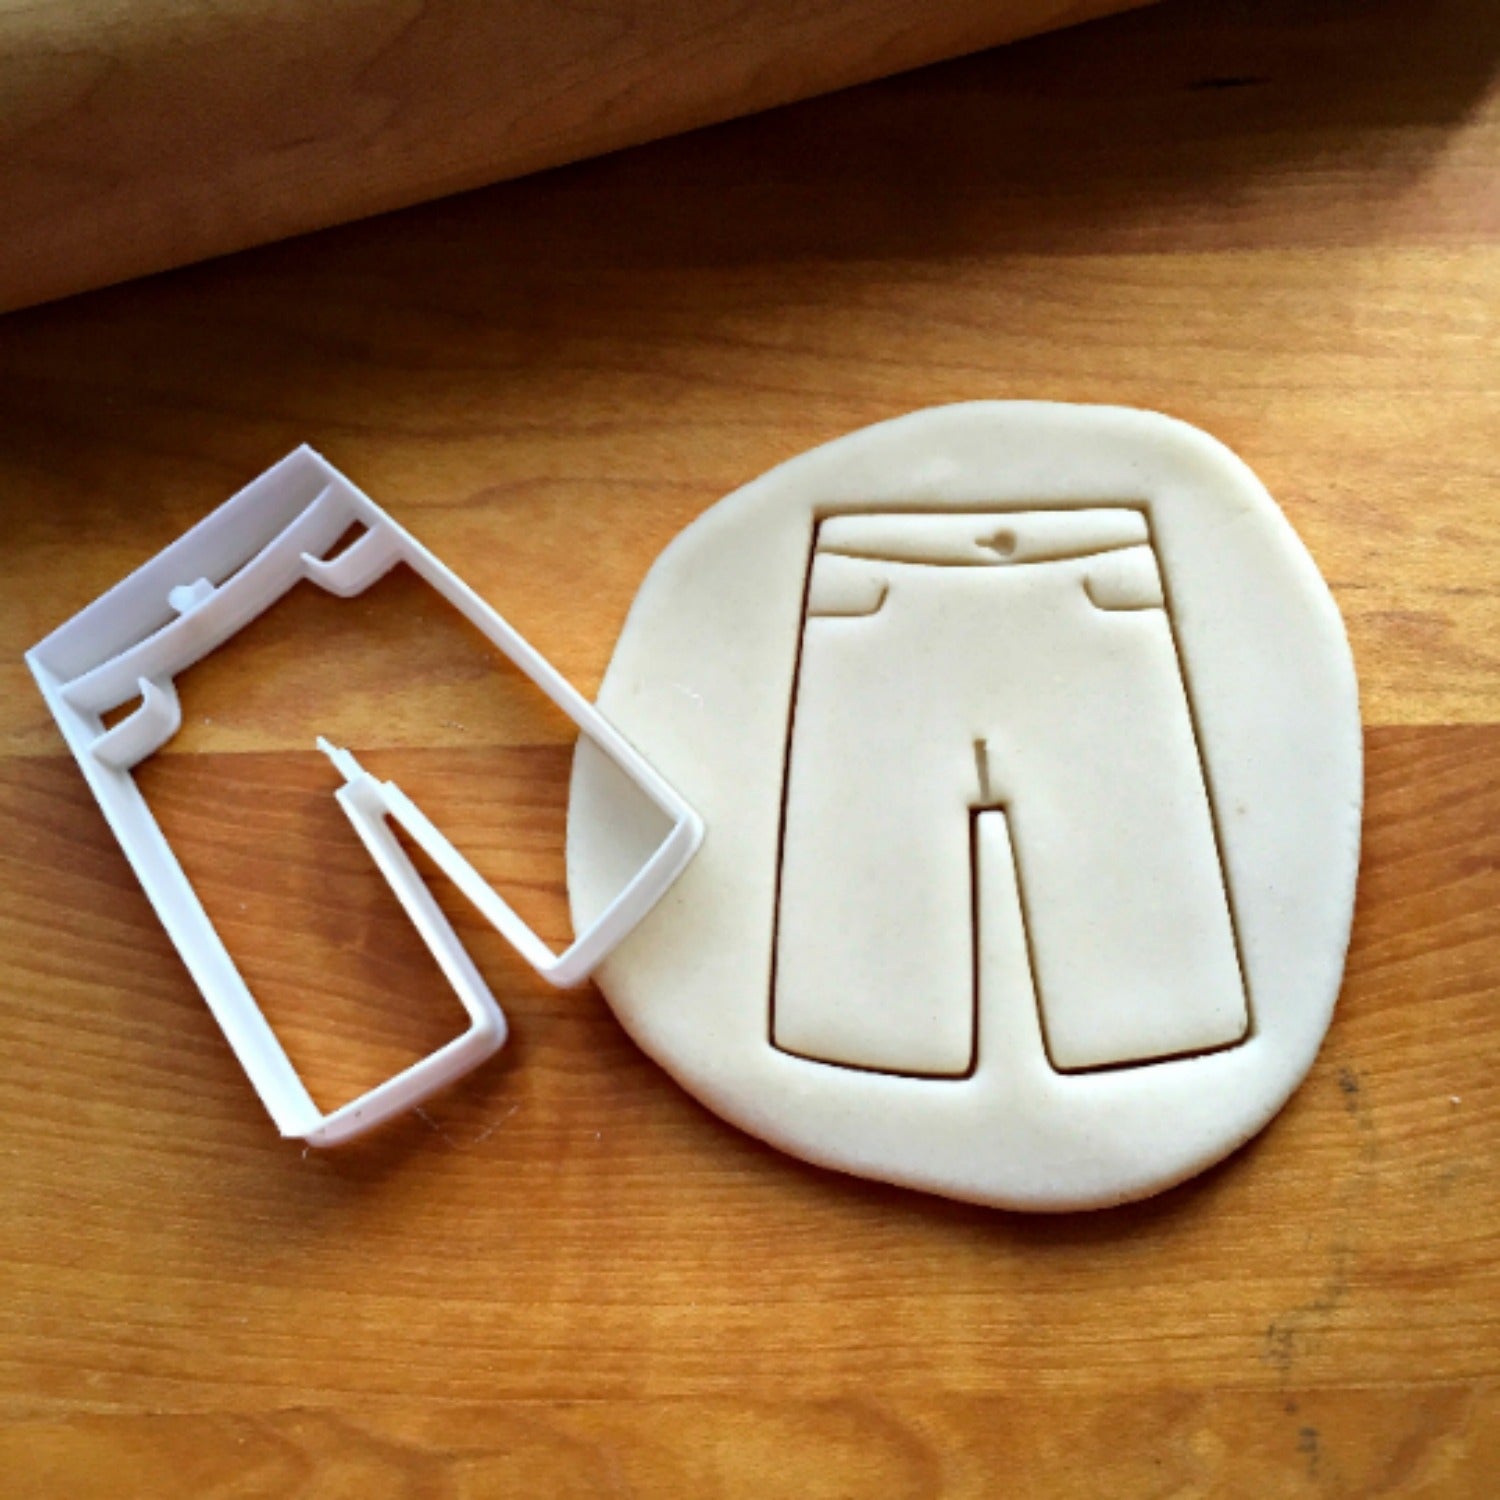 Capri Pants Cookie Cutter/Dishwasher Safe